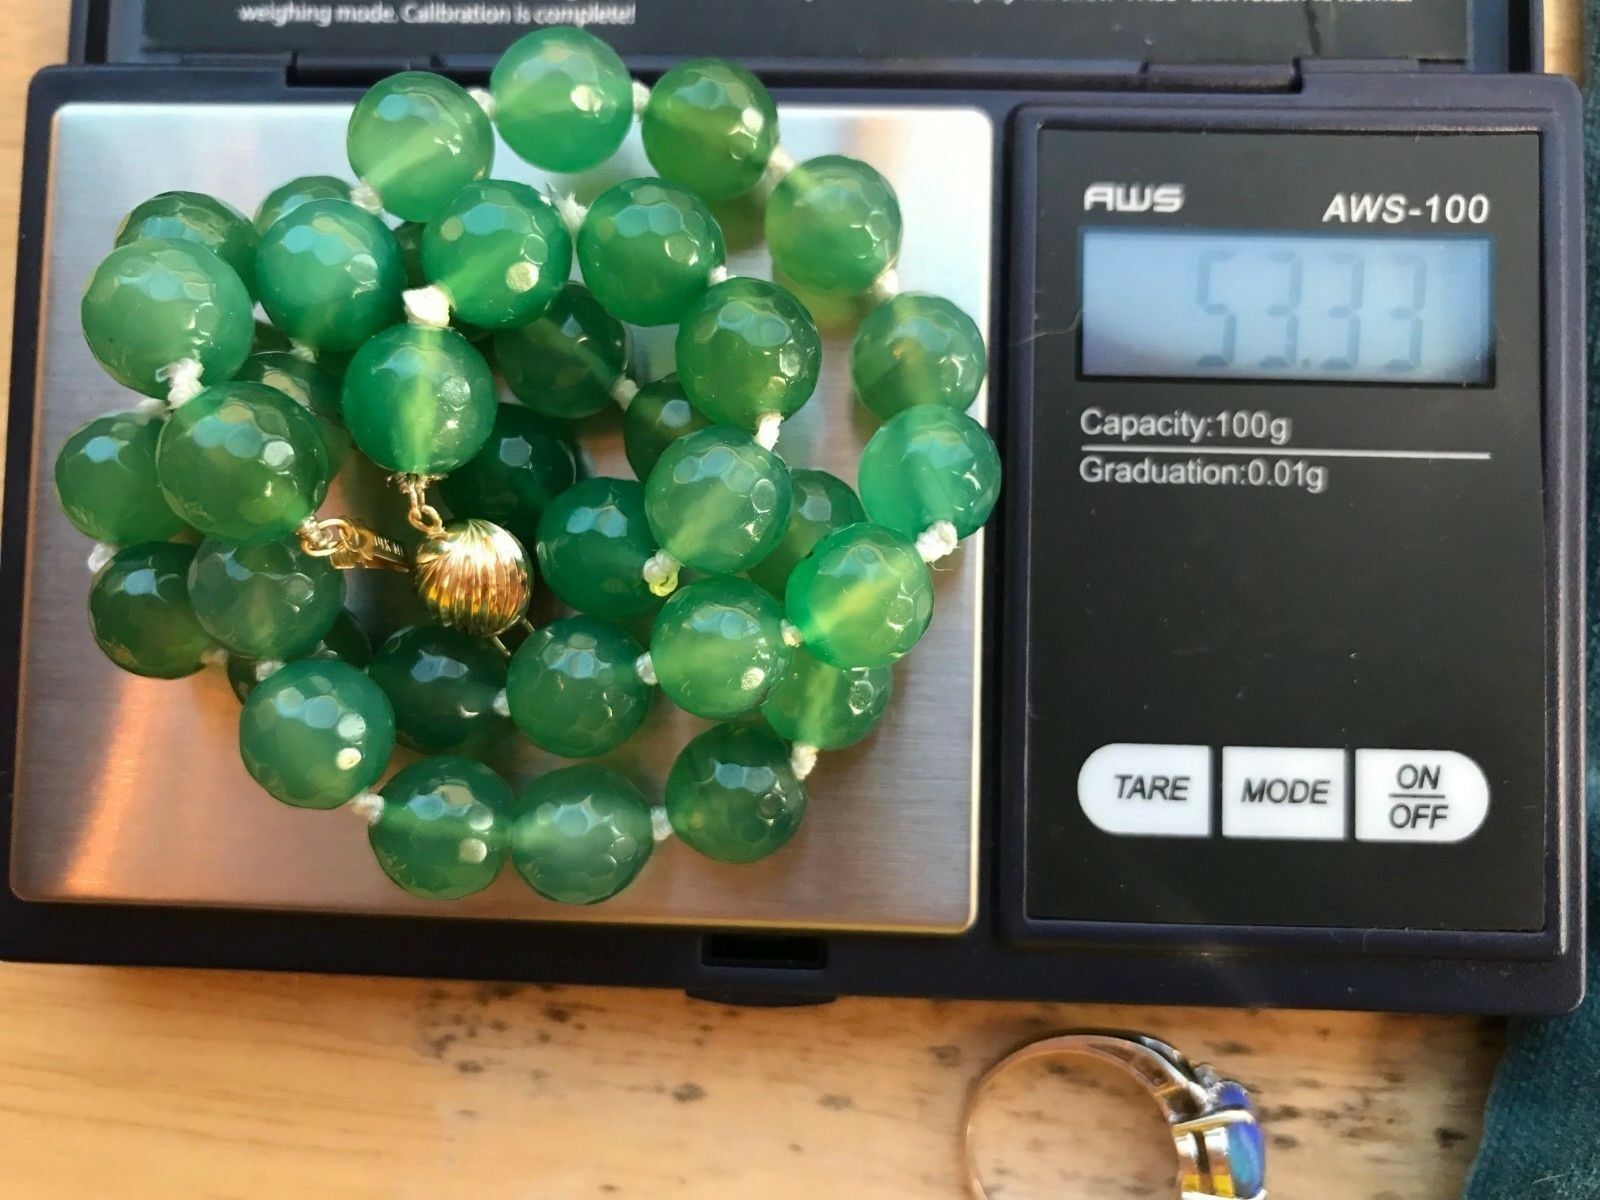 14k Yellow Gold Apple Green Chrysoprase Bead Necklace. Large 10mm Gems-K3L3J